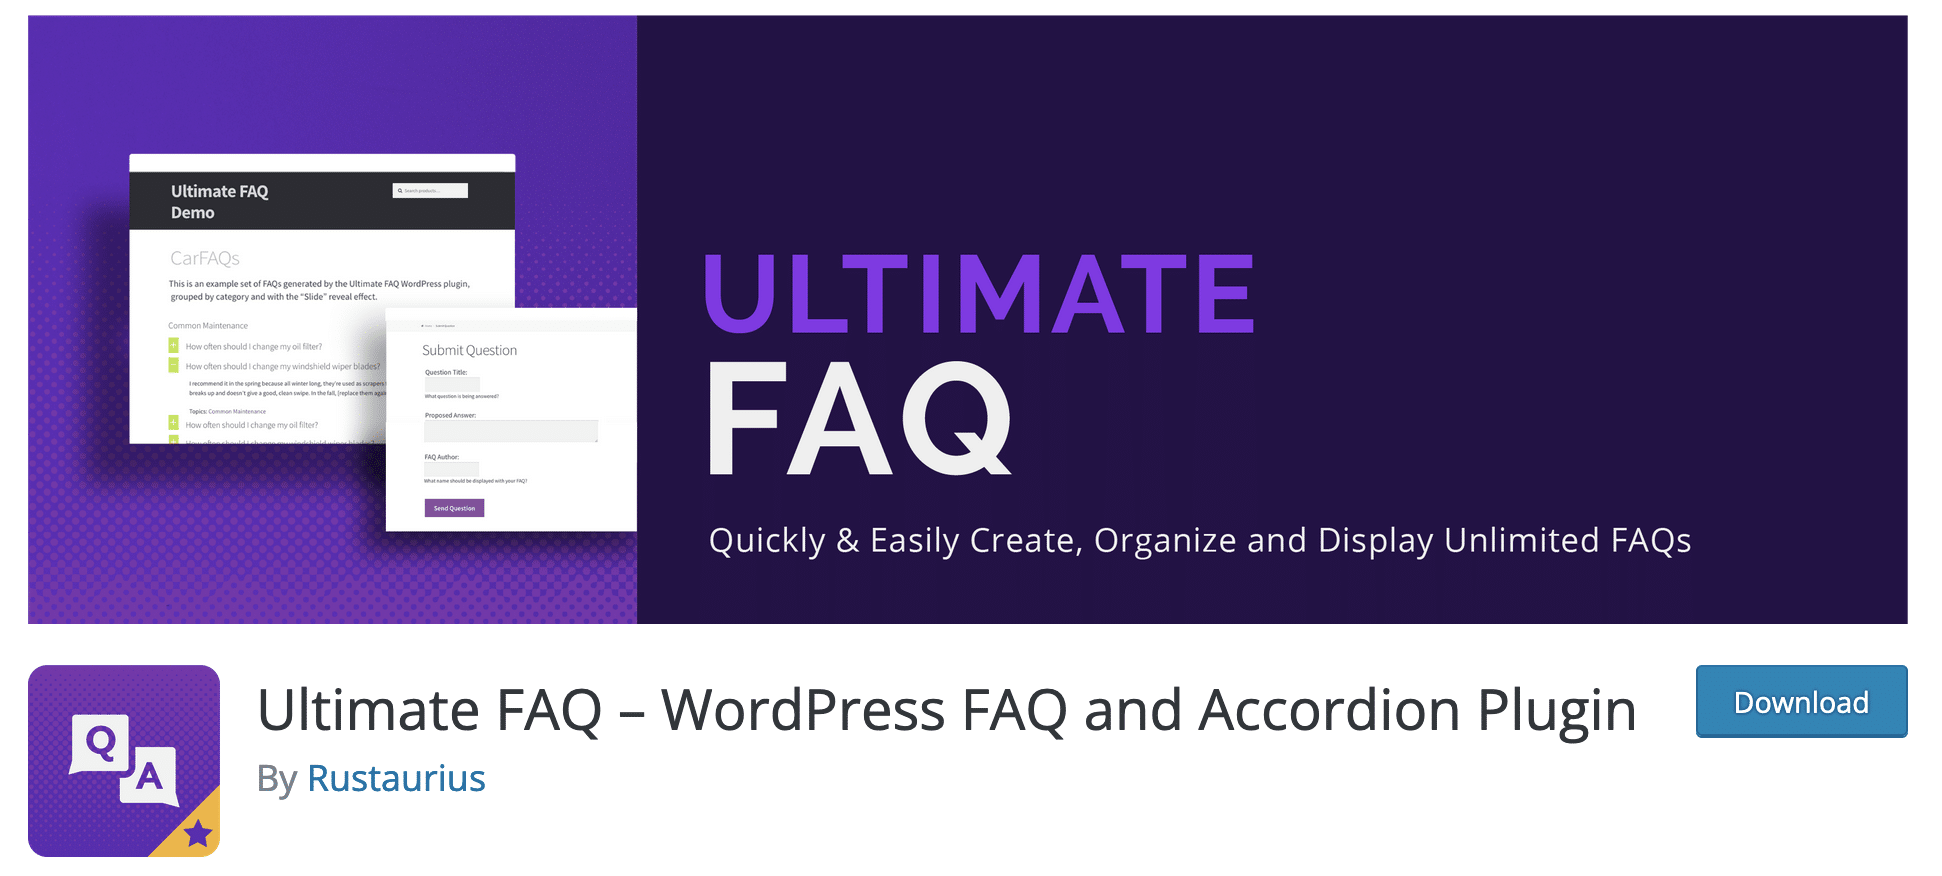 Ultimate FAQ plugin to add FAQs to your site on WordPress.